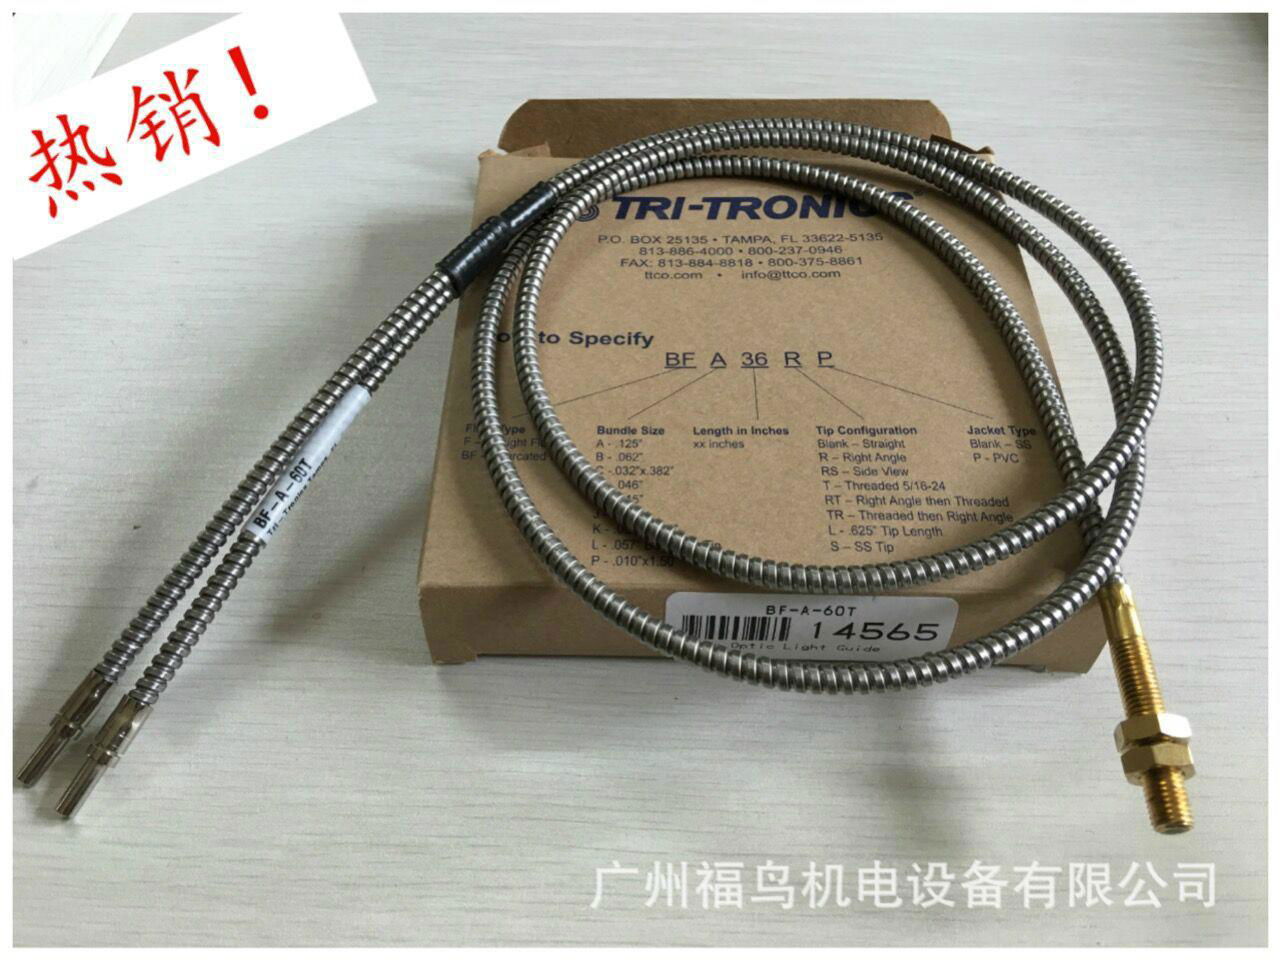 TRI-TRONICS光纖, 型號: BF-A-60T